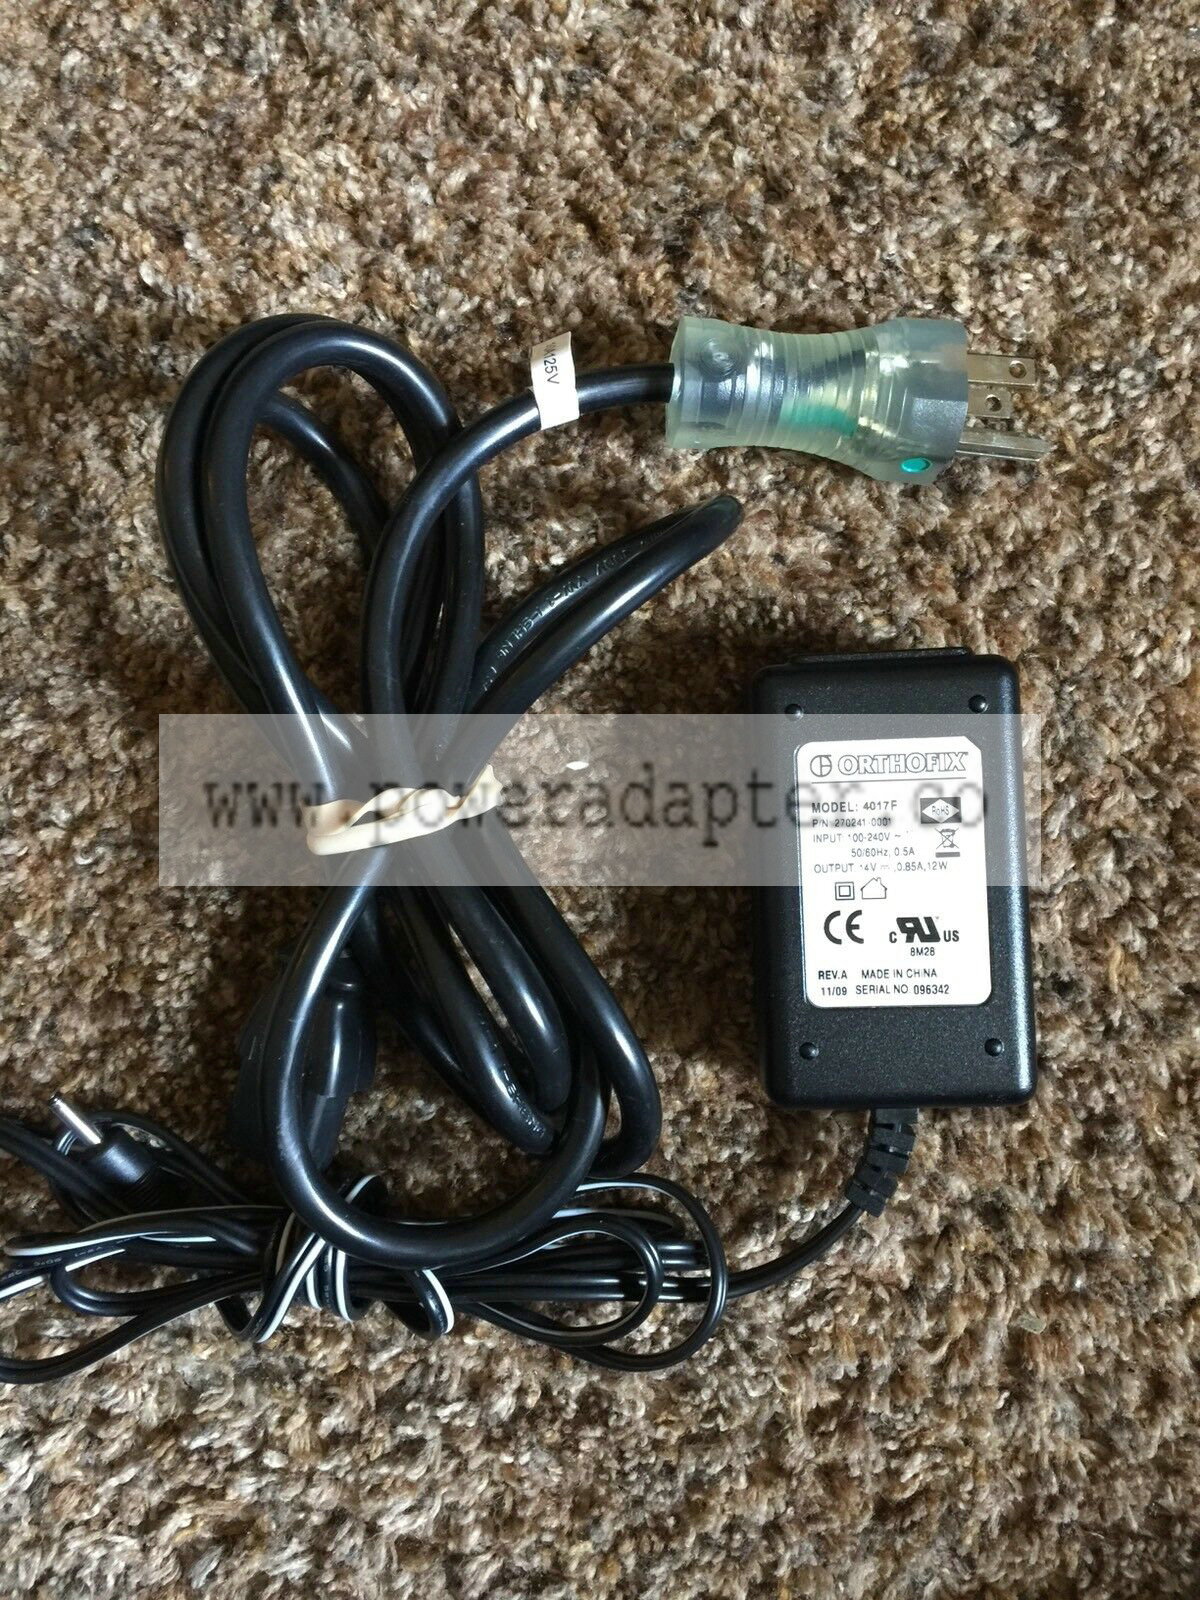 Orthofix AC Adapter Power Supply Cord 4017F 14v 0.85A For 2212/2505/3202 Brand: Orthofix MPN: 270241-0001 Model: 4